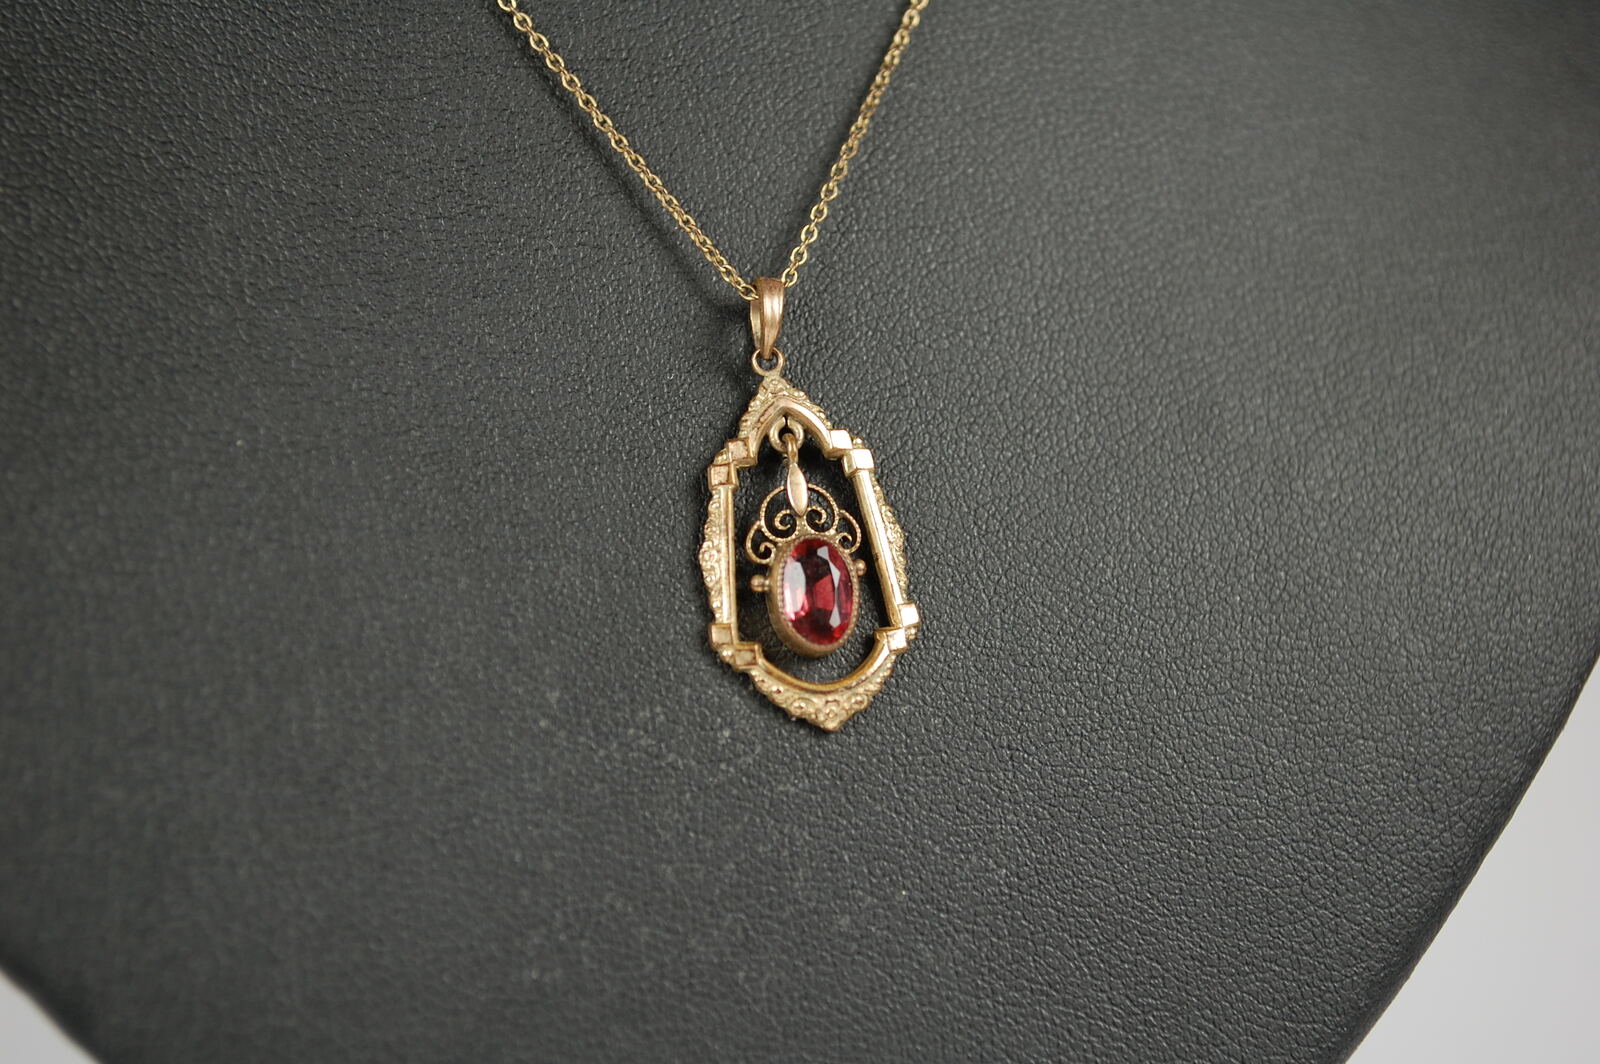 Kette, Silber vergoldet, mit roten Stein, 2,3g, 40cm lang | MA-Shops